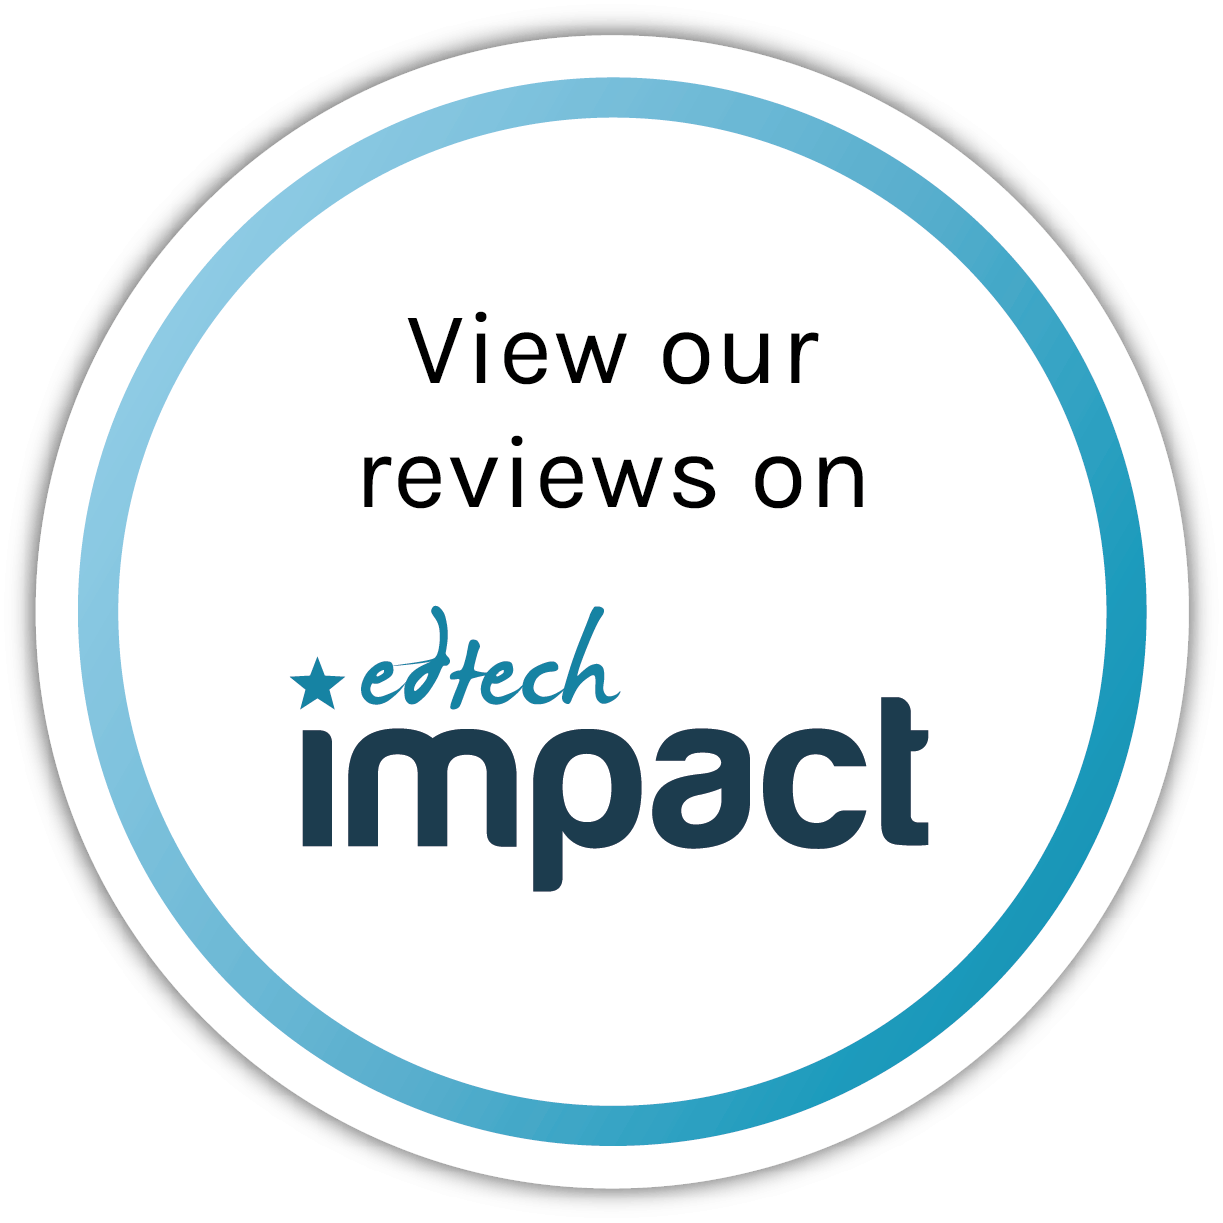 edtech impact review button